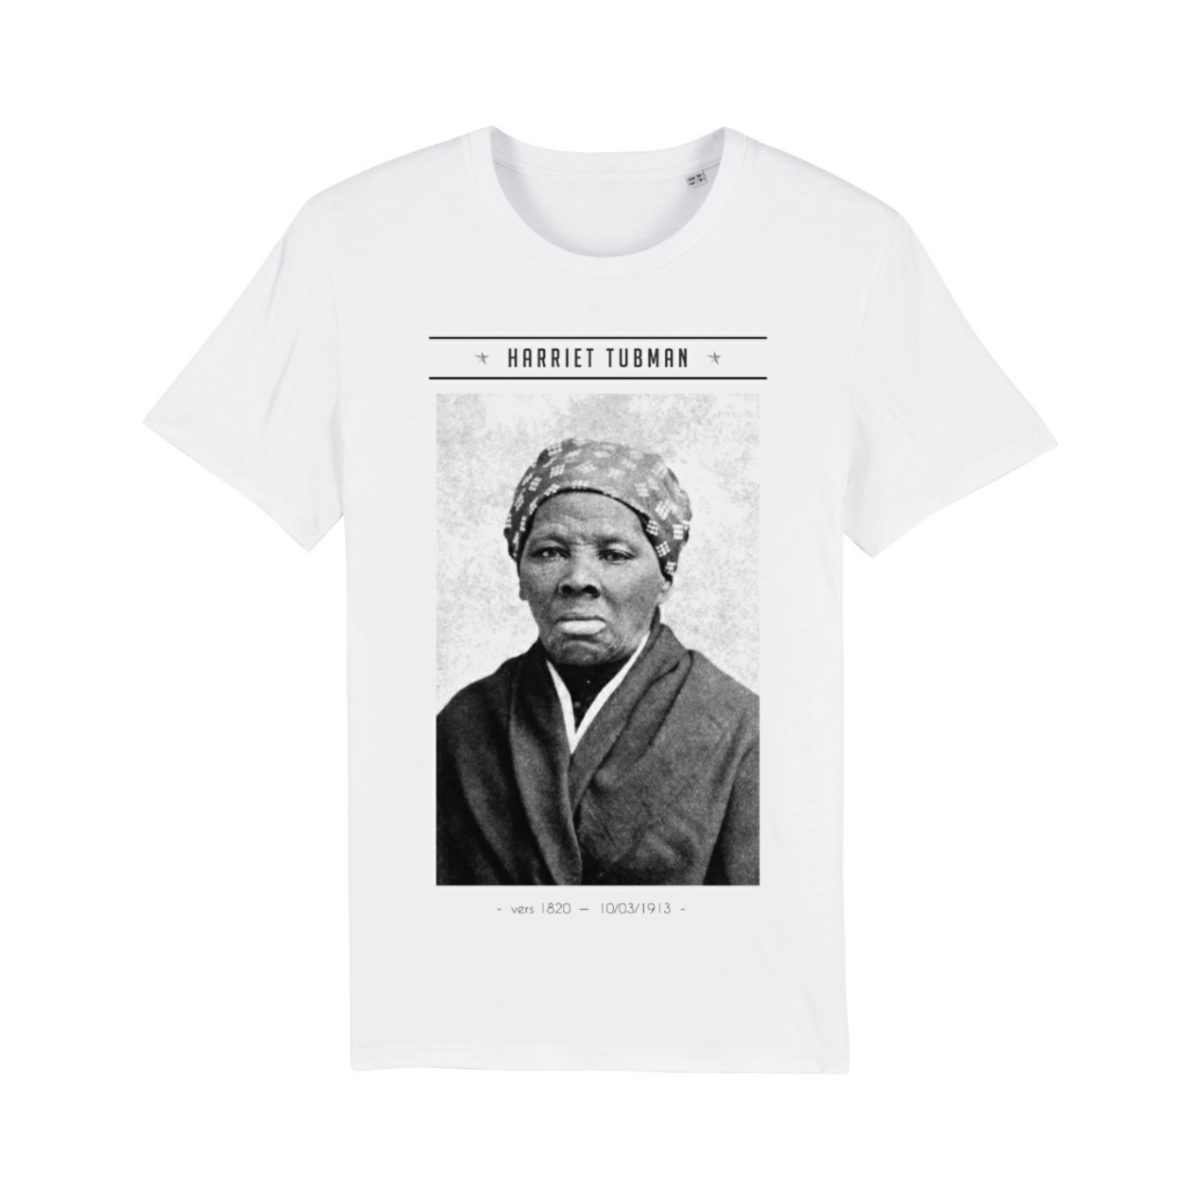 My T-Shirt Afro – “Harriet Tubman”